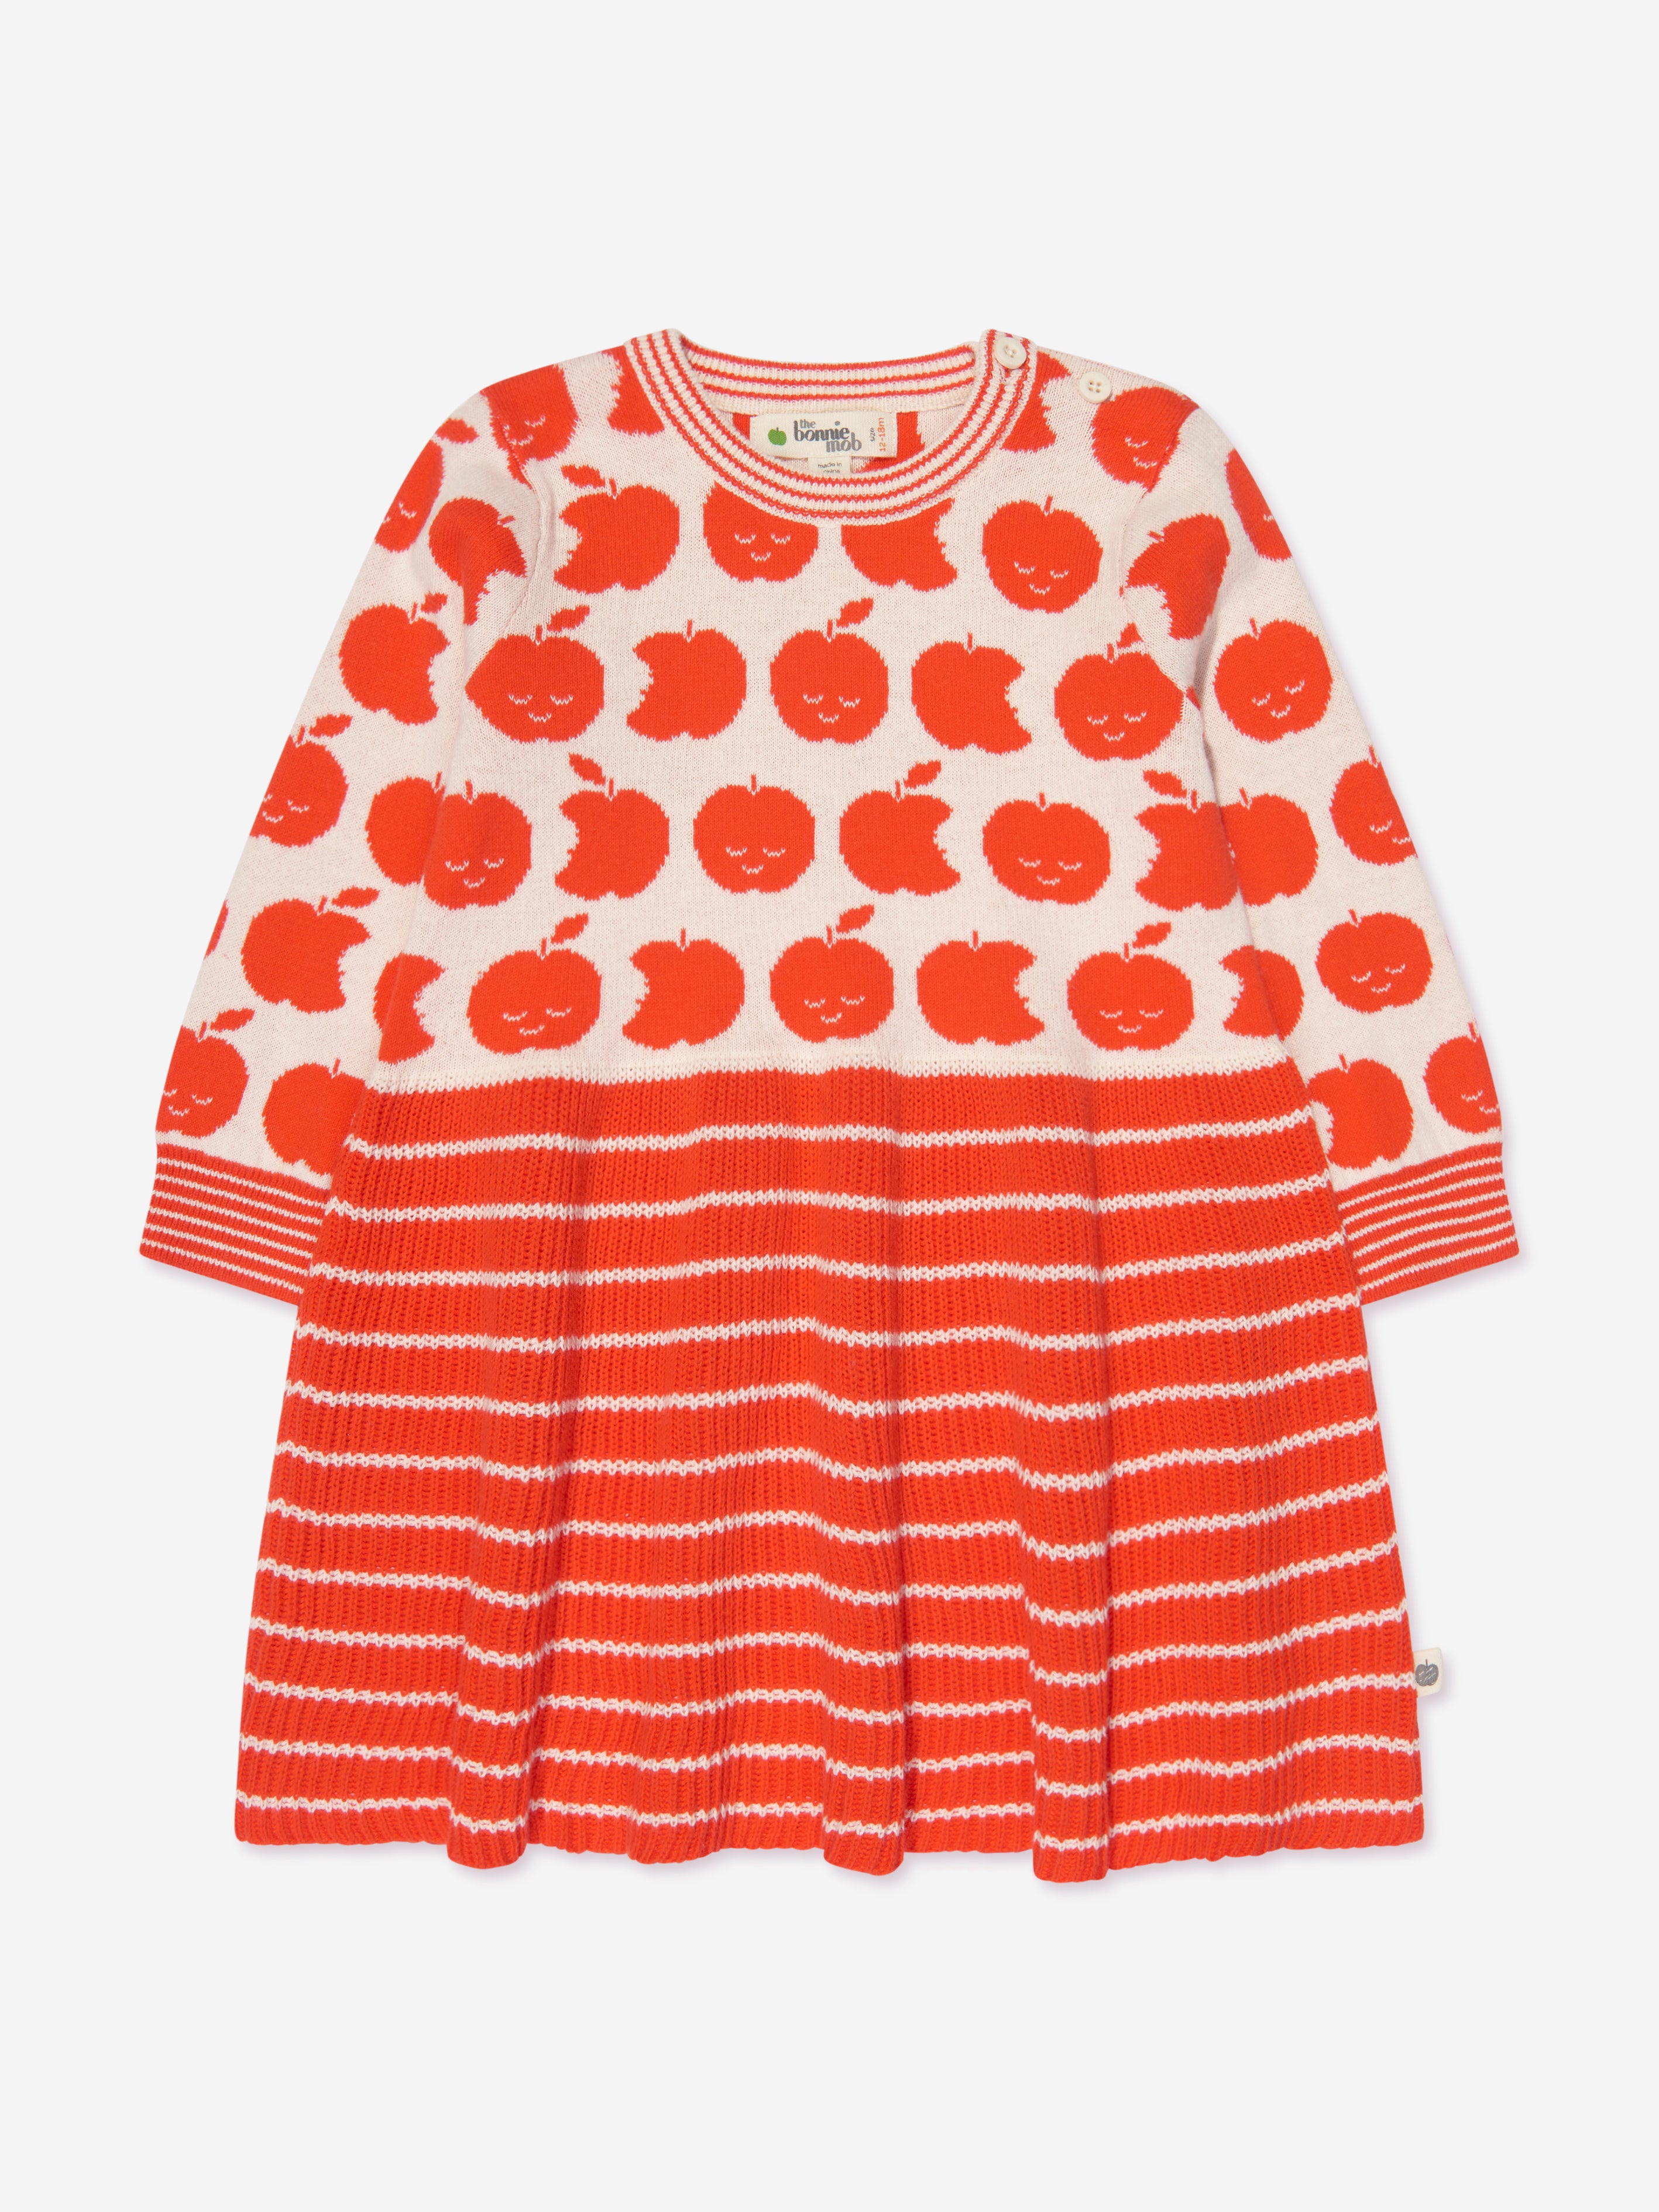 The Bonnie Mob Babies' Girls Apple Knit Dress In Orange